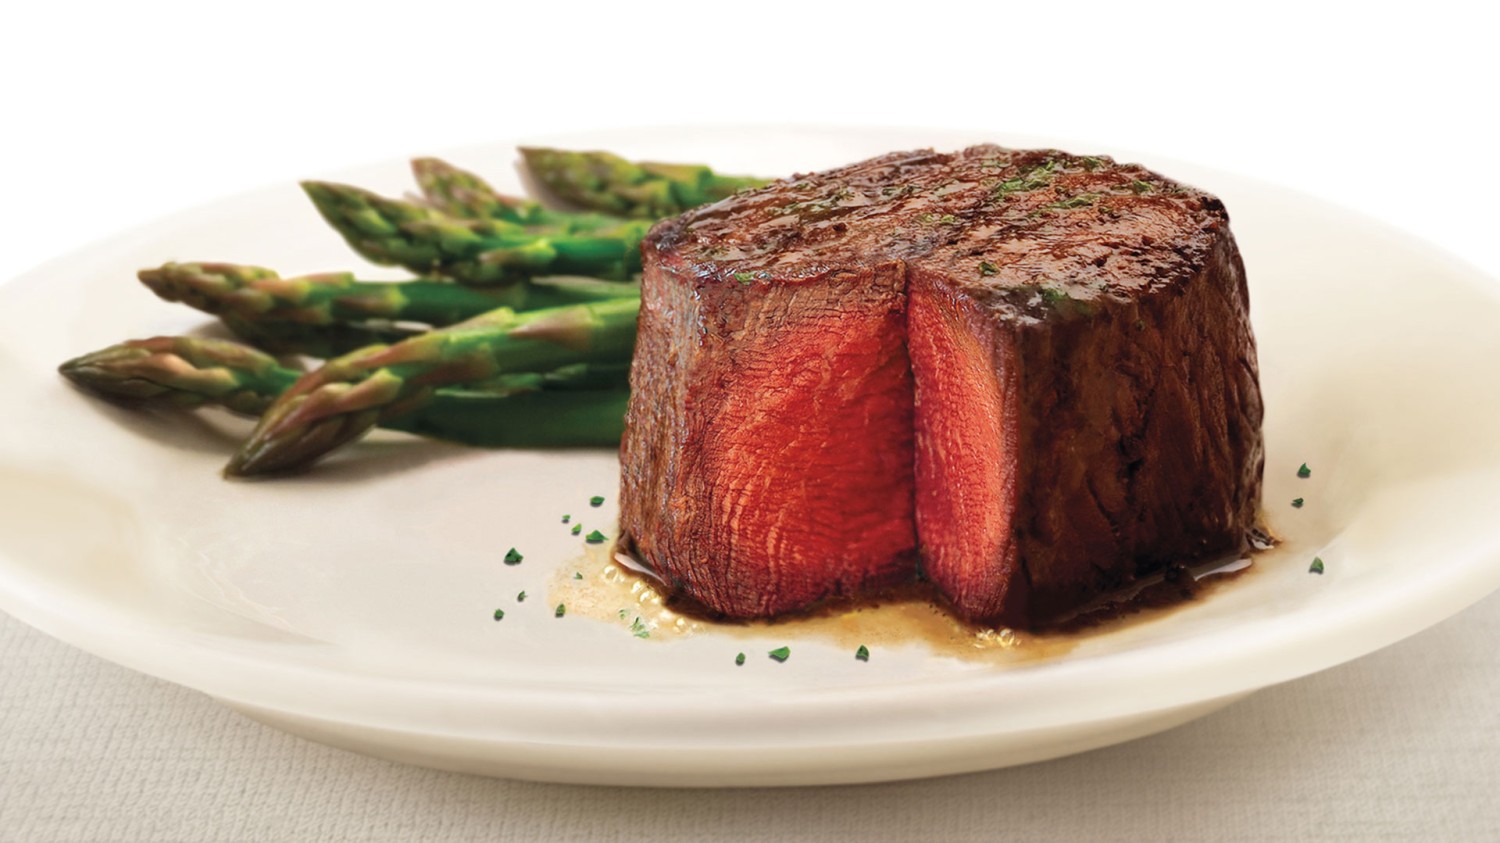 Amway Grand_Ruths Chris Steak House_Steak with Wedge Cut Out_Asparagus